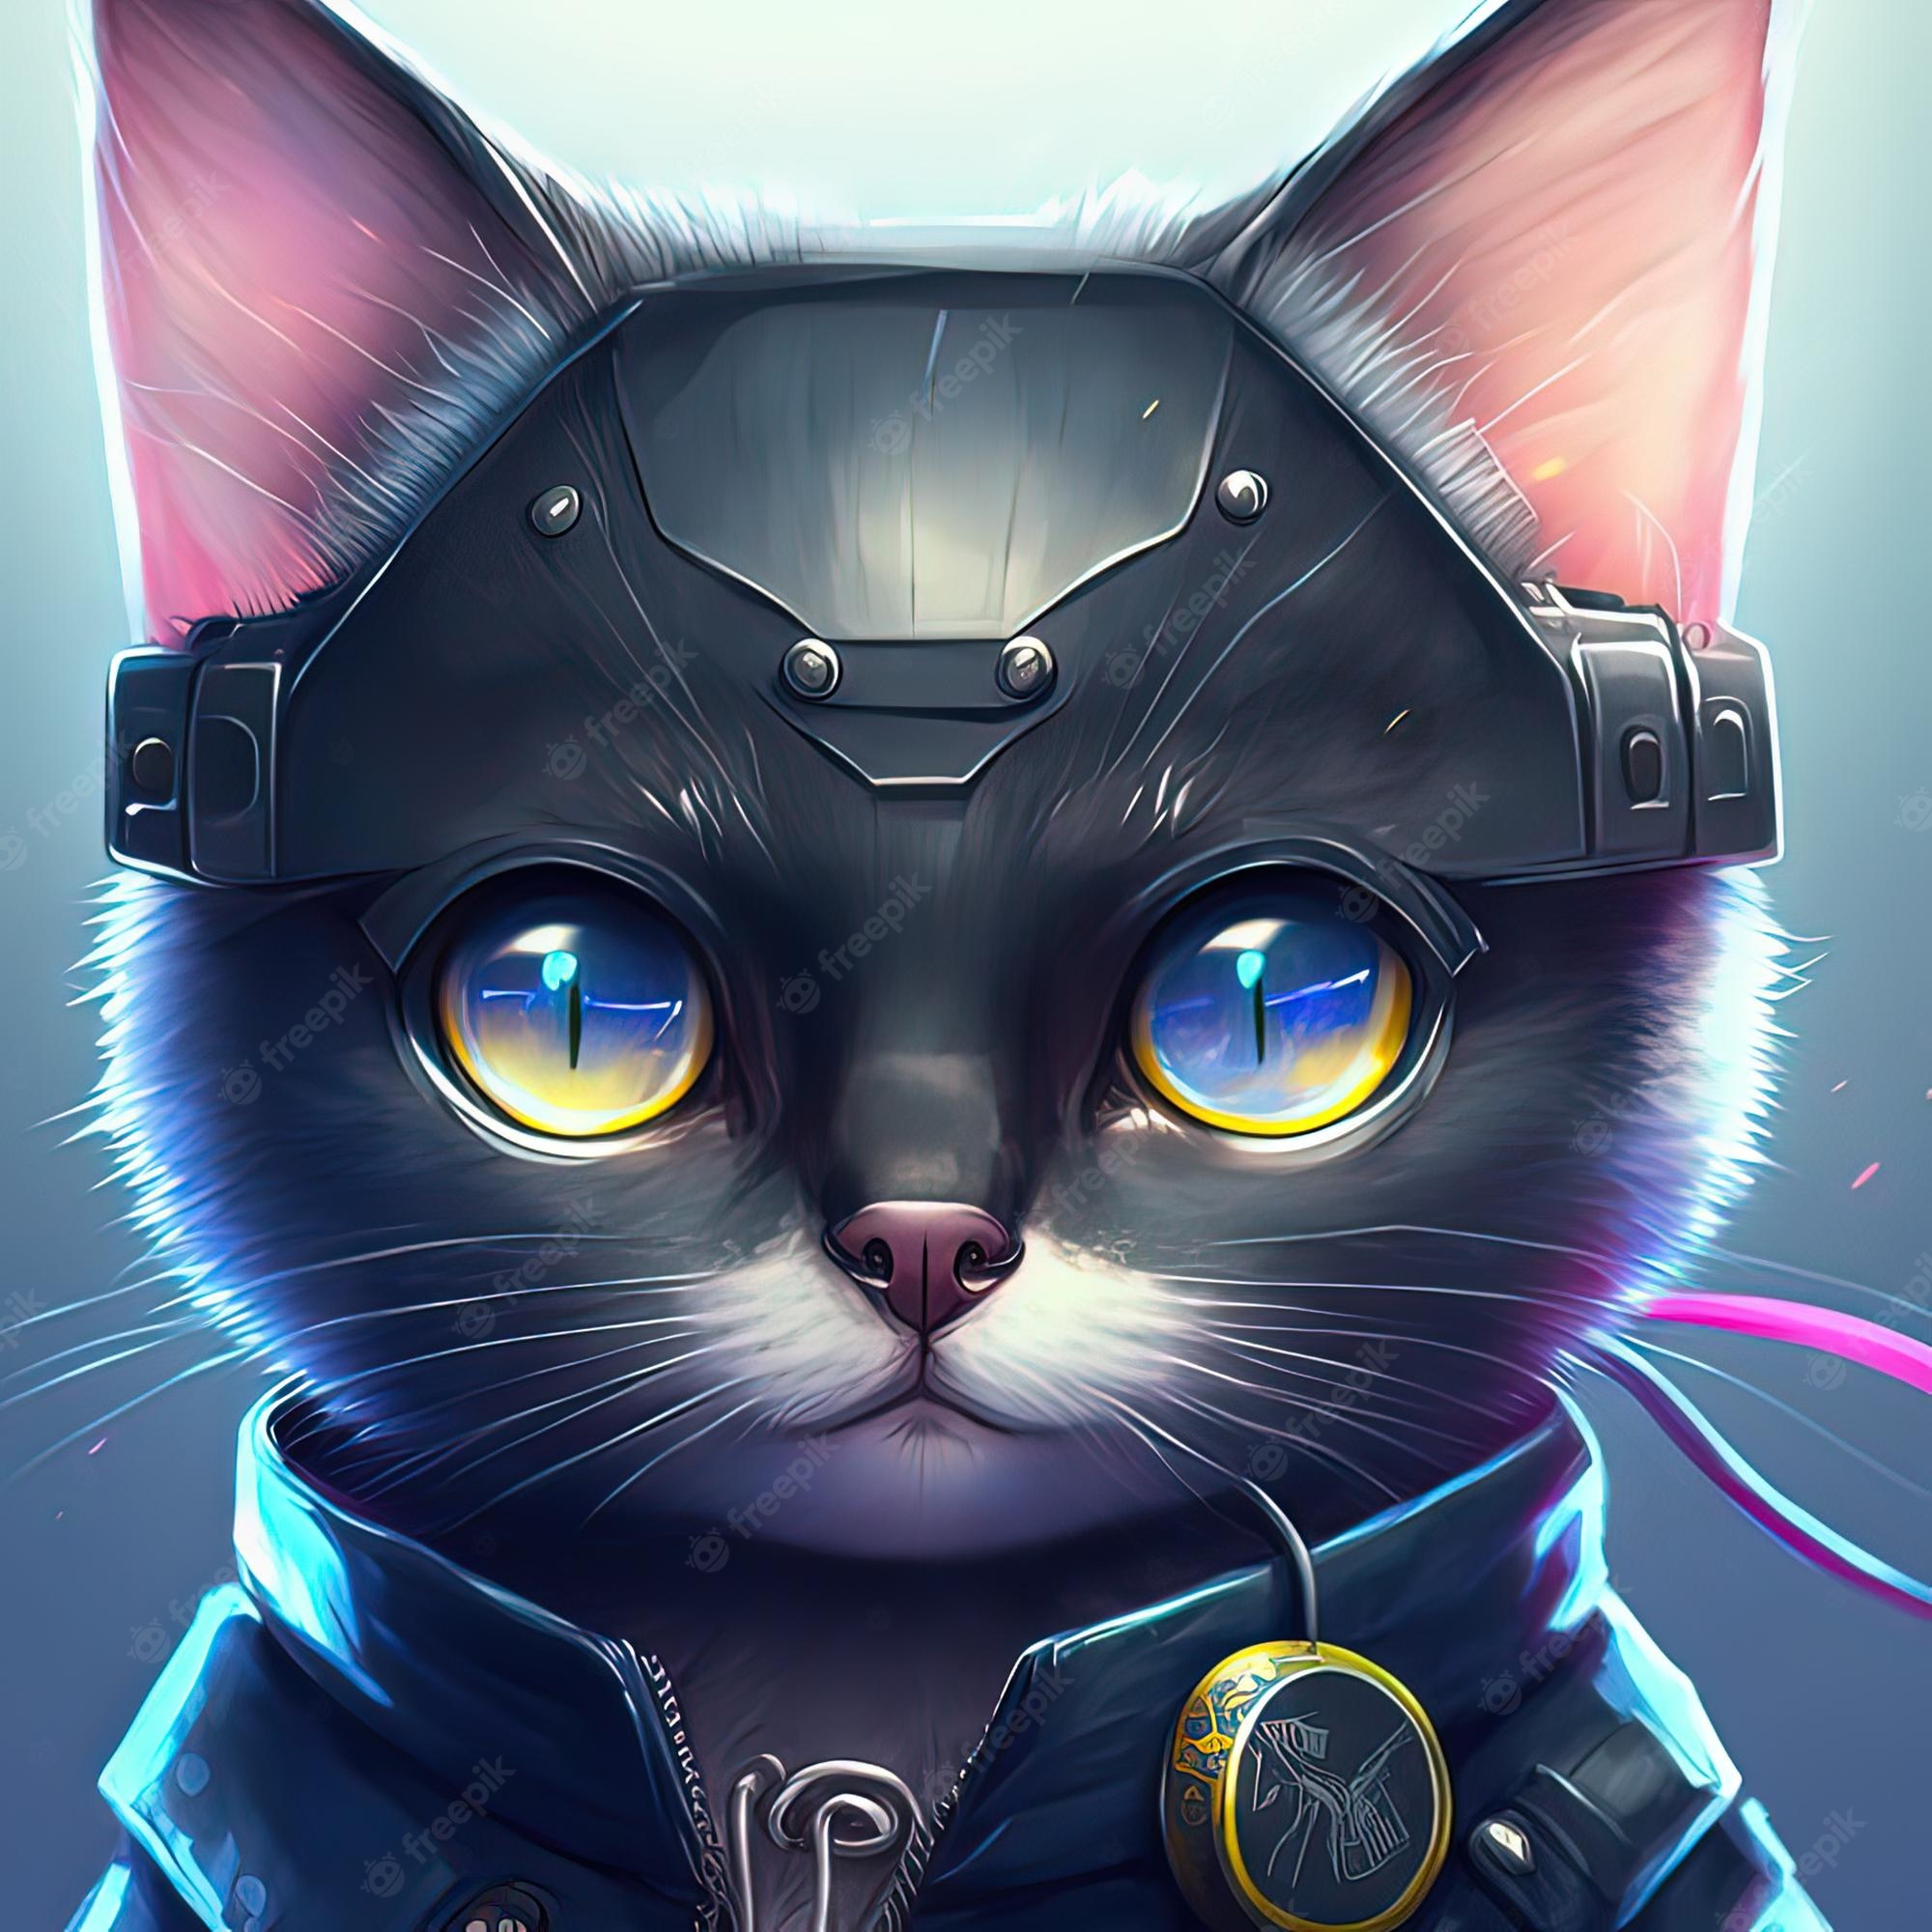 Premium Photo. Futuristic cyber cat in cyberpunk style digital art style illustration painting